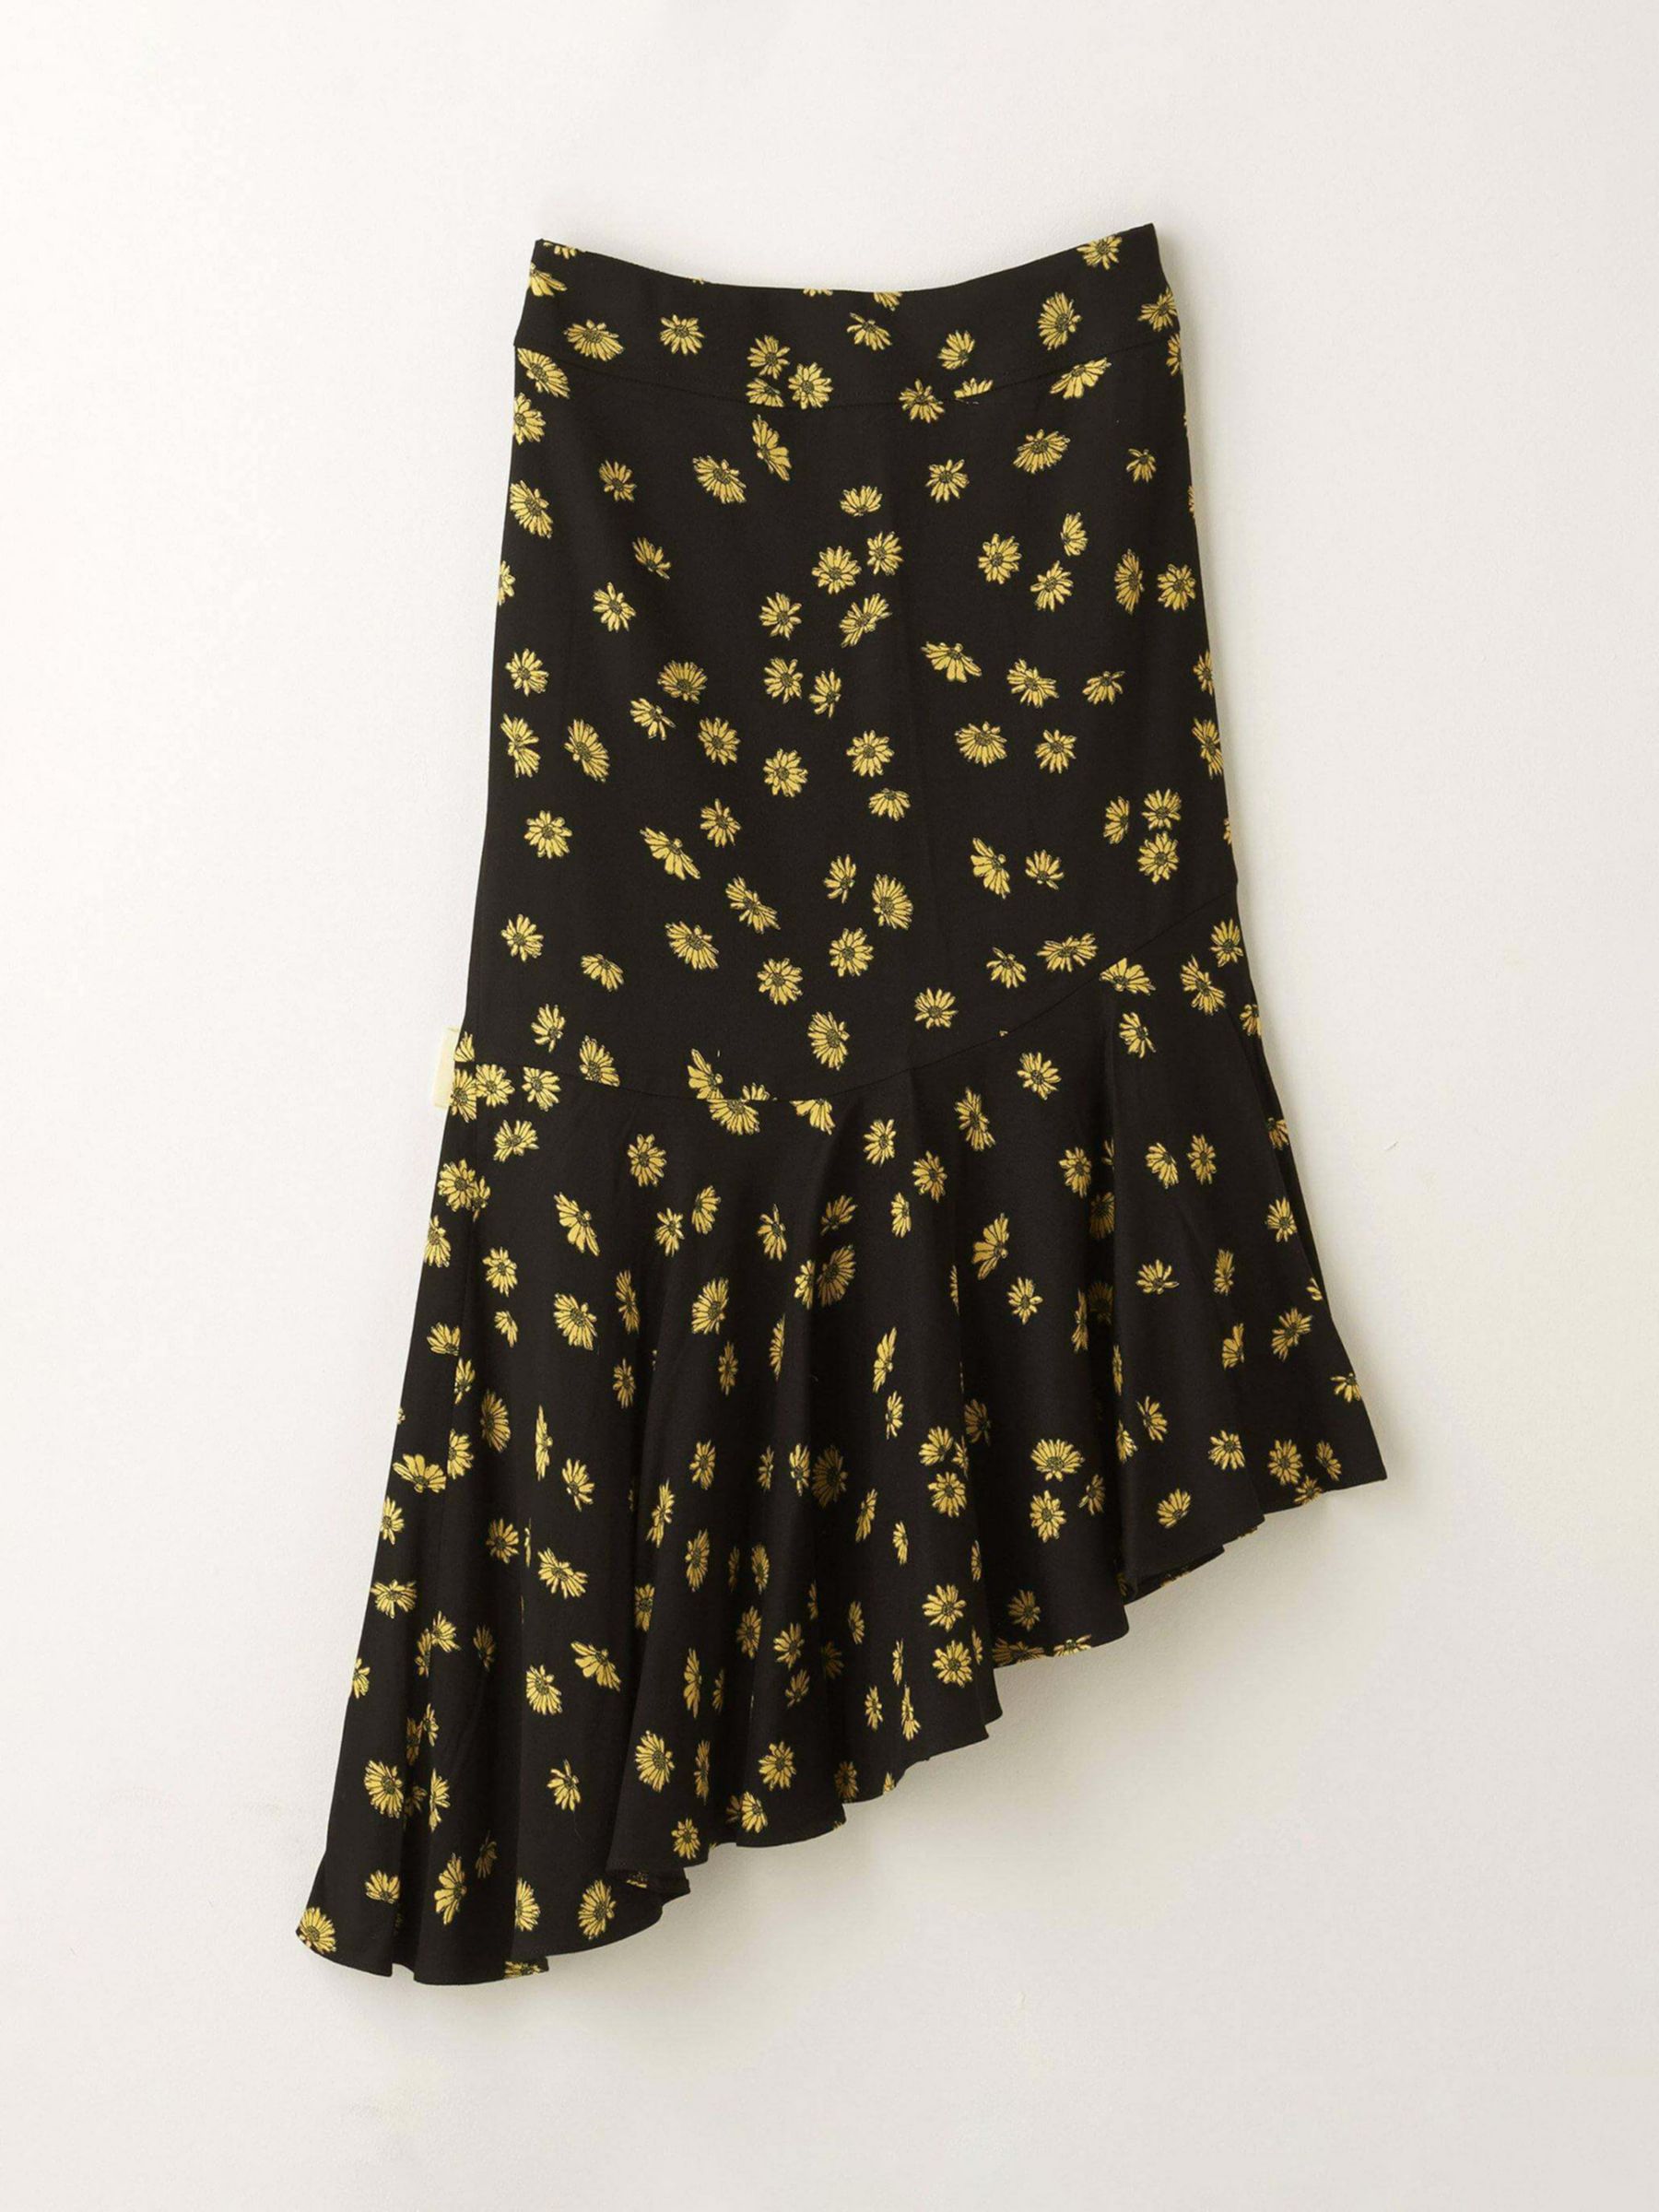 Truly Daisy Print Asymmetric Midi Skirt, Black/Yellow, 8